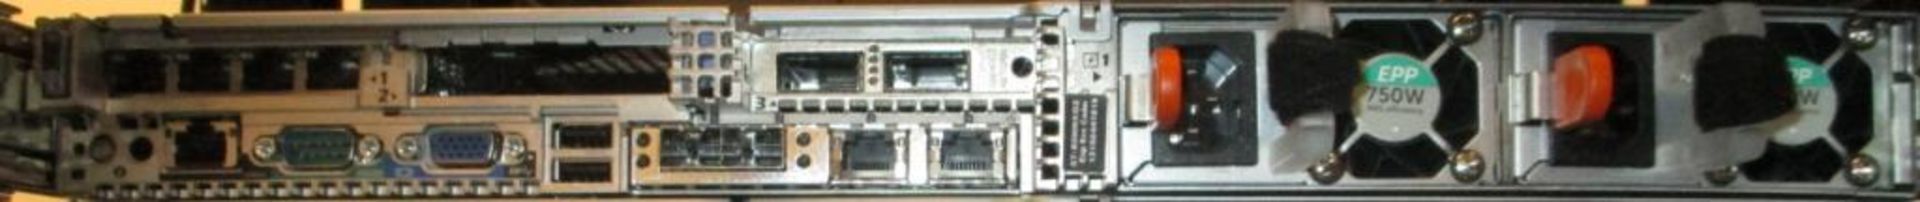 Dell Rack Server - Image 2 of 2